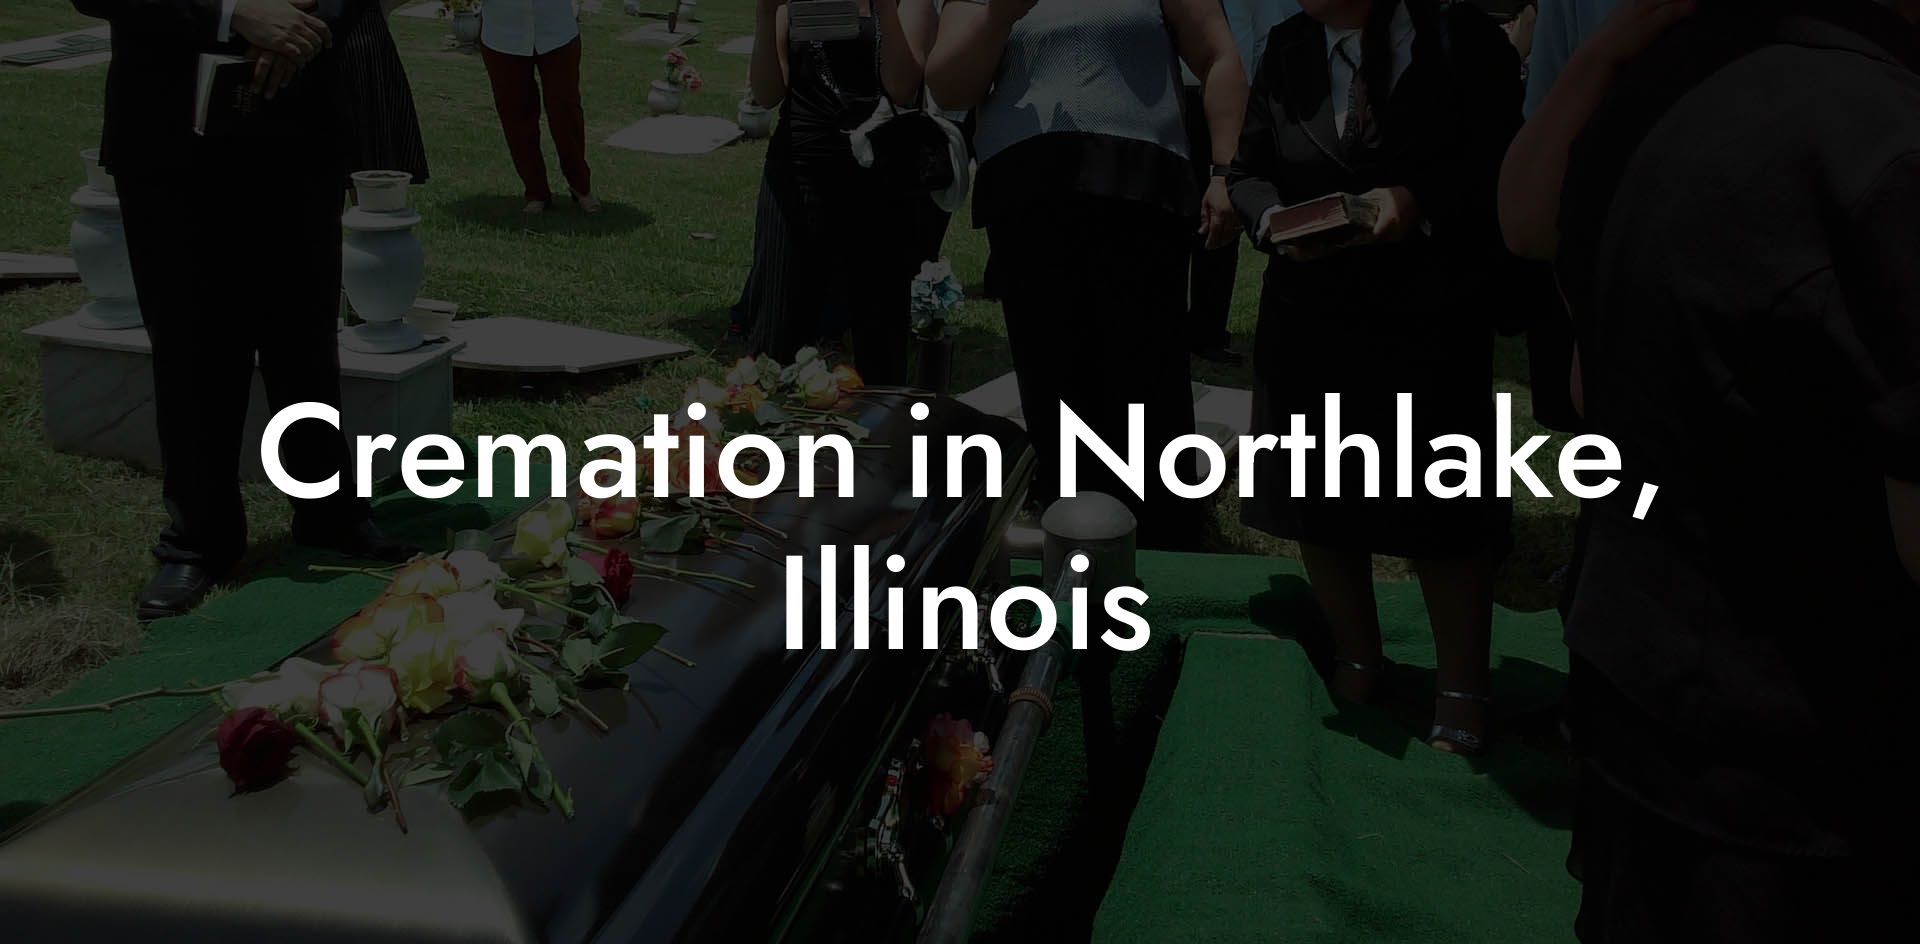 Cremation in Northlake, Illinois